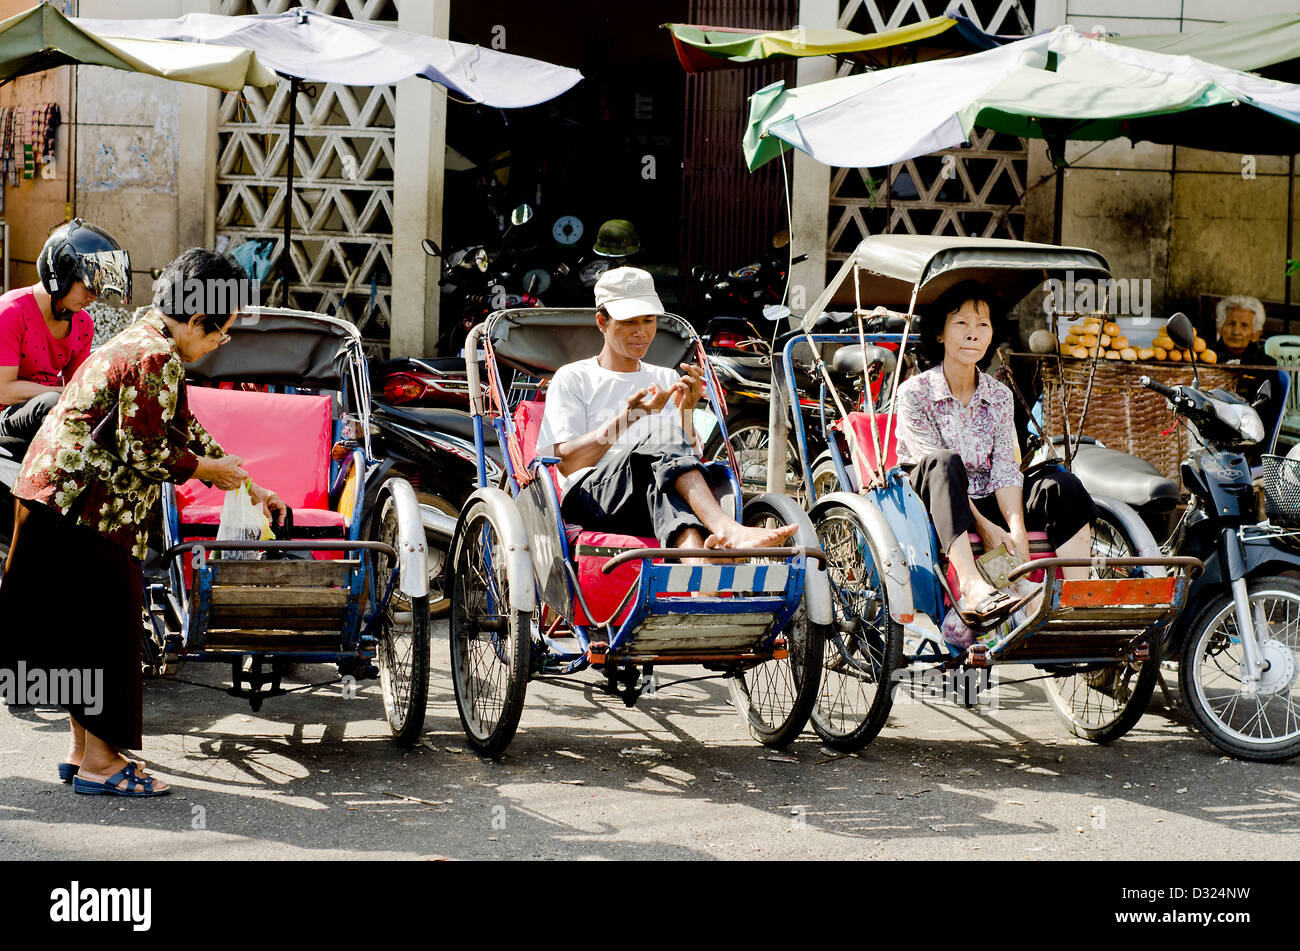 Cycle rickshaws in Phnom Penh Stock Photo